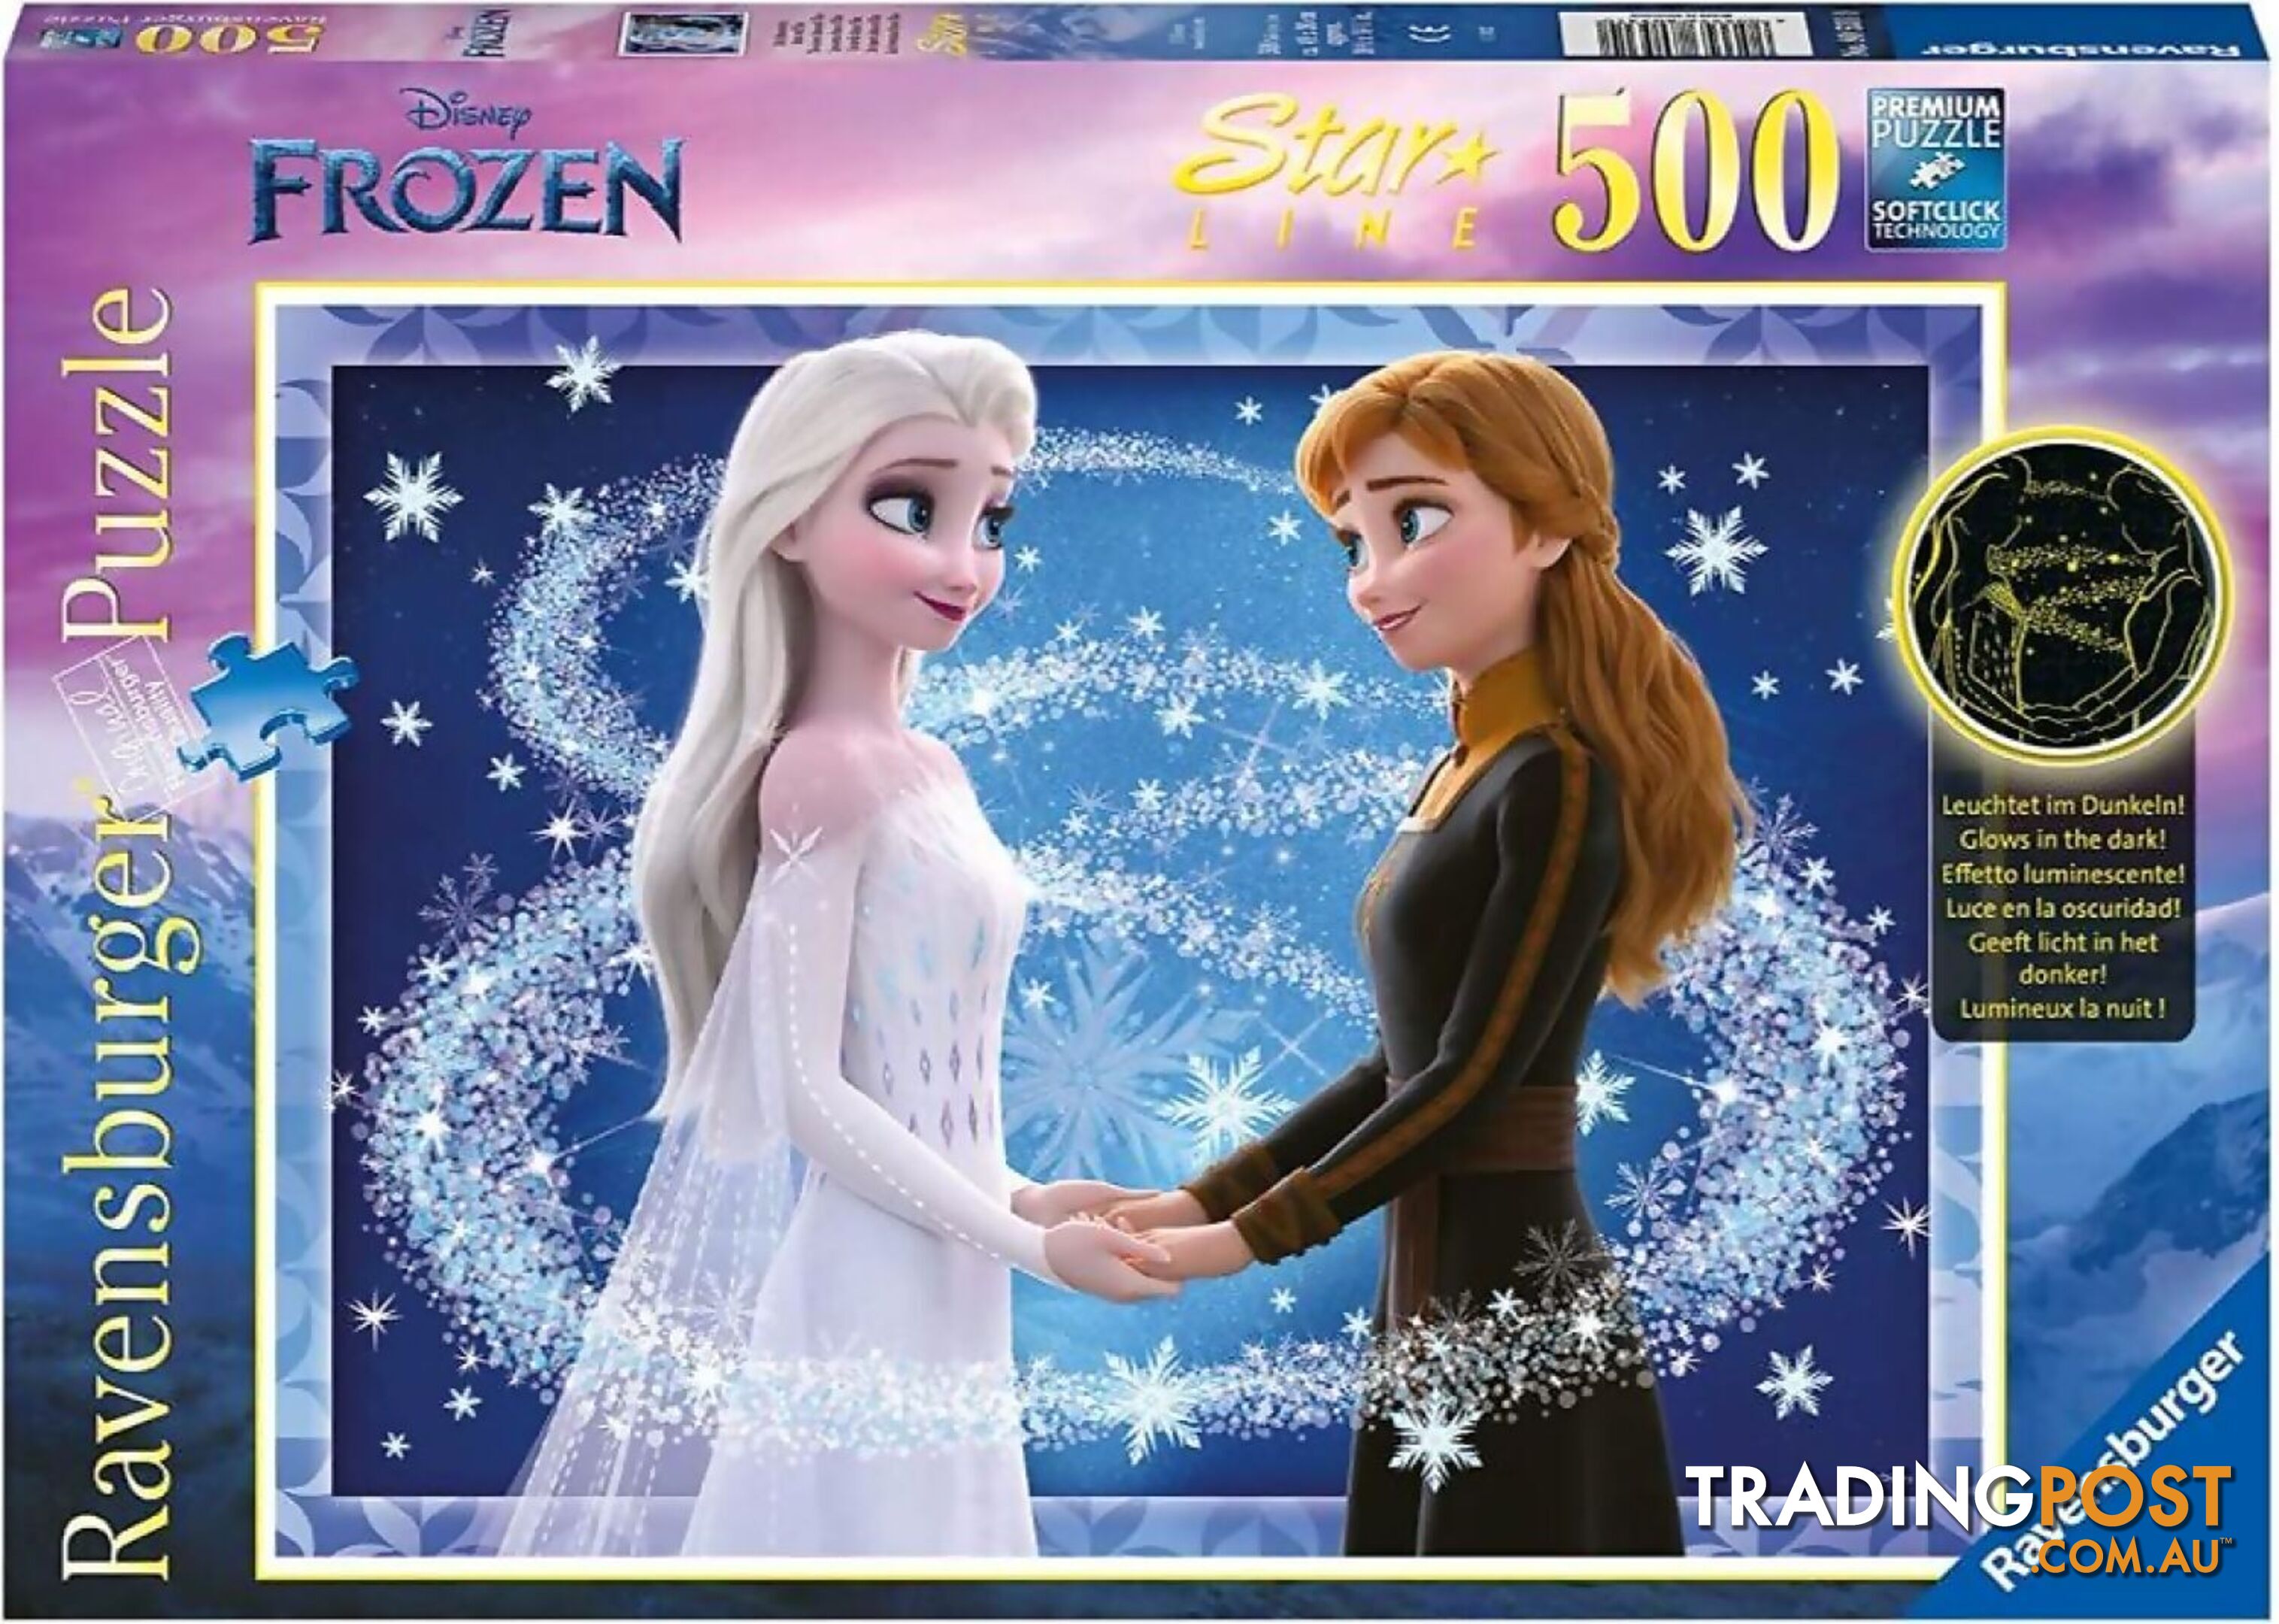 Ravensburger - Disney Frozen Sisters Anna & Elsa Jigsaw Puzzle 500pc - Mdrb80531 - 4005556805310